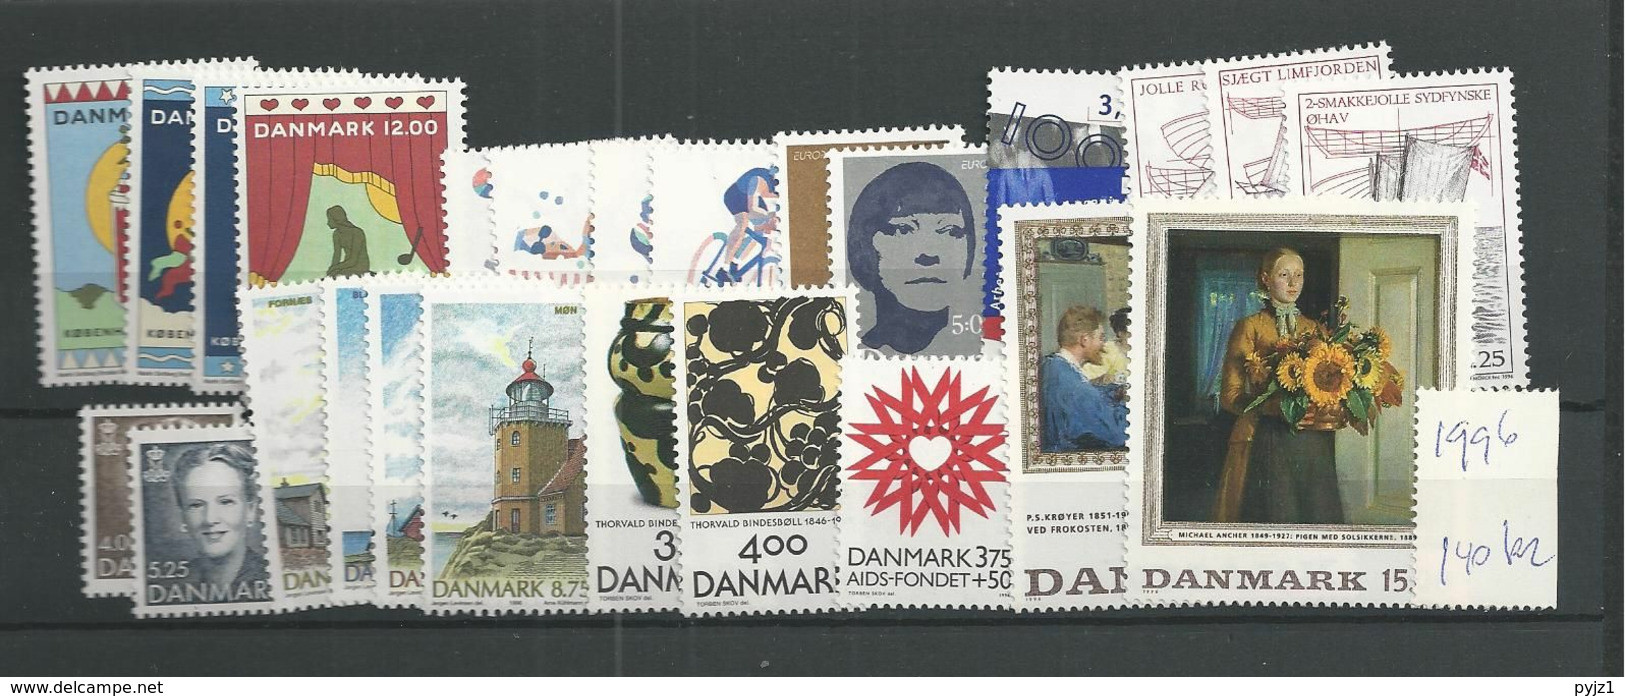 1996 MNH Denmark, Dänemark, Year Complete, Postfris - Annate Complete